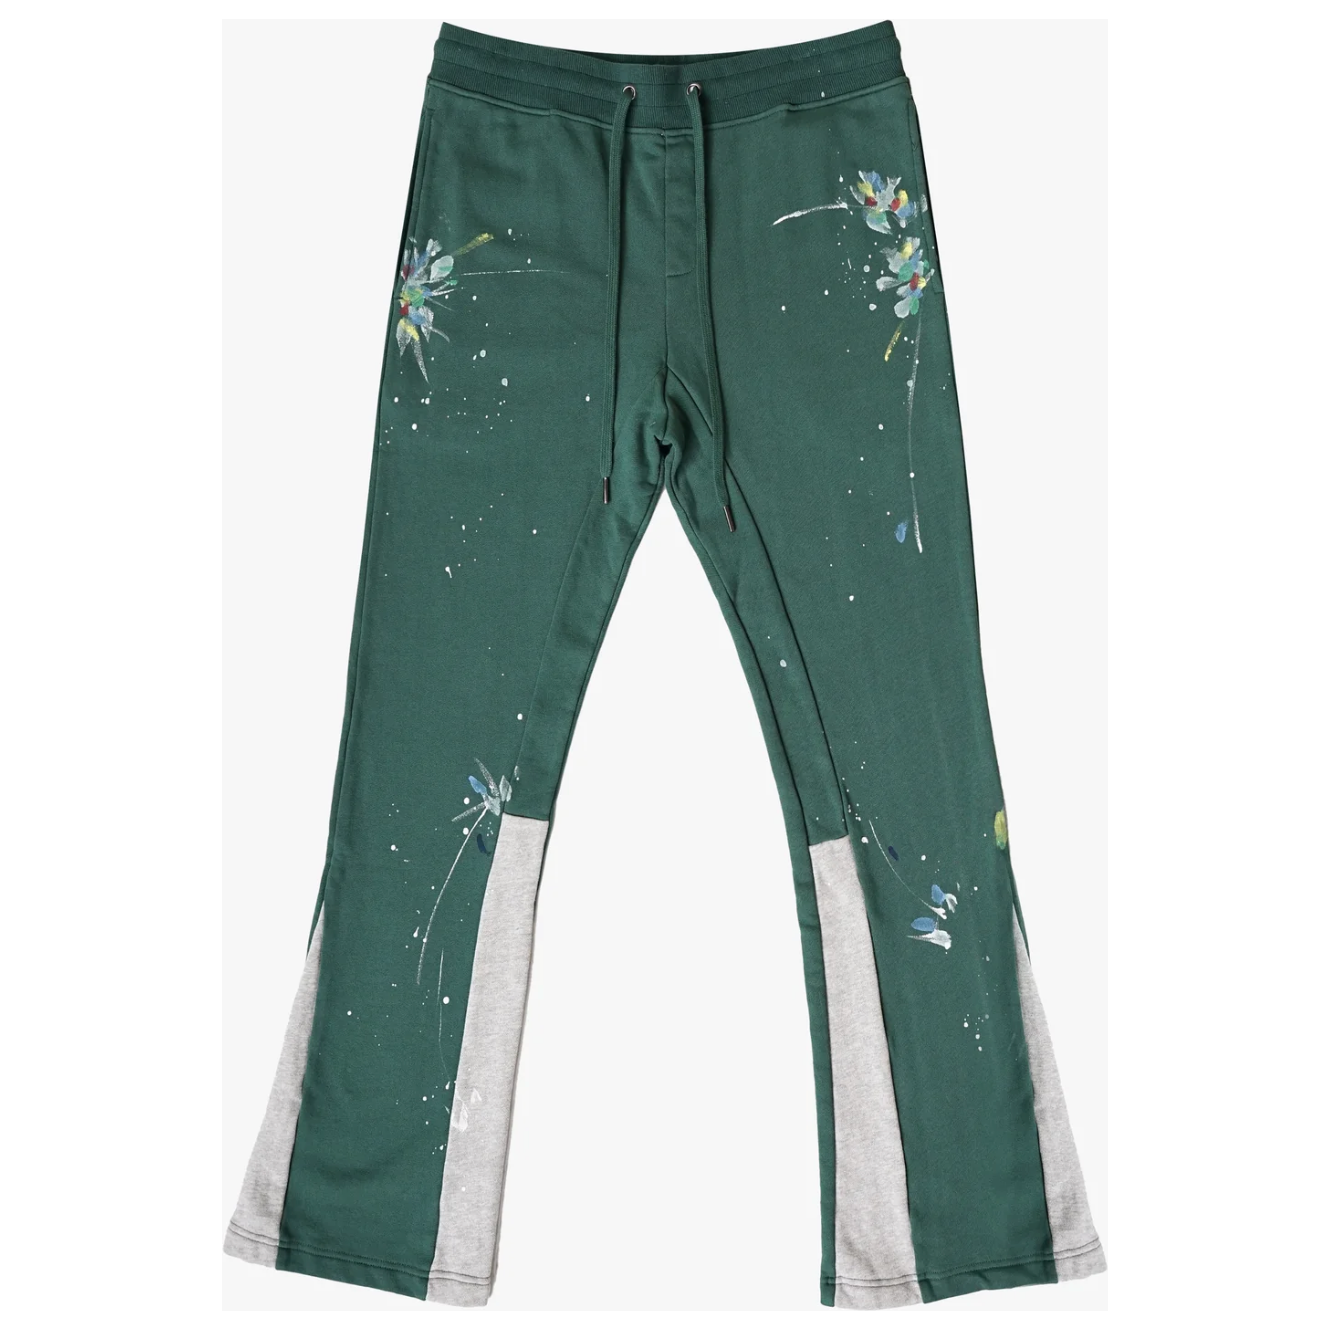 EPTM Showroom Sweatpants - Hunter Green